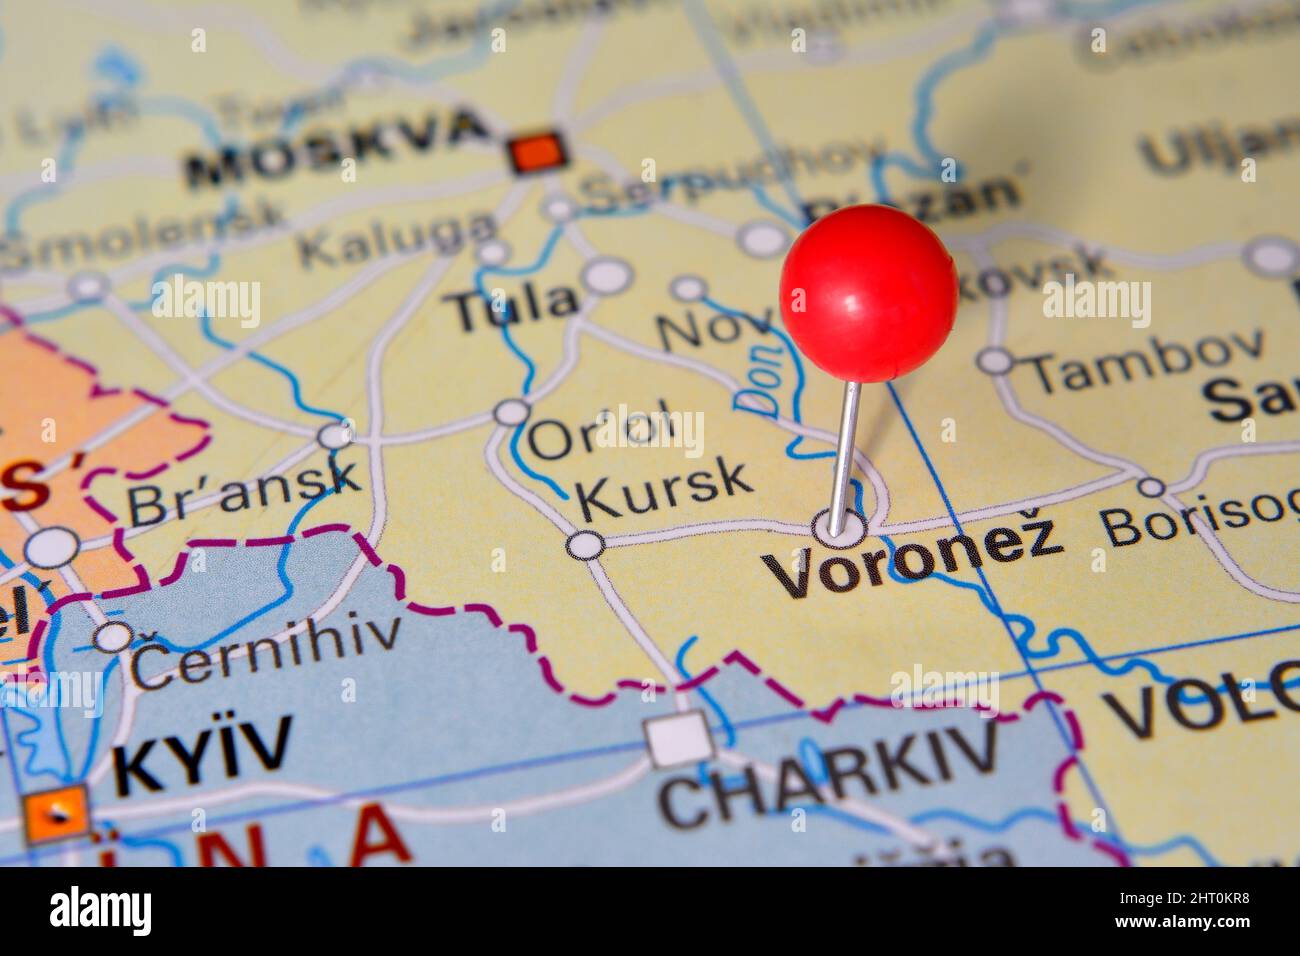 Voronez (voronezh or Voronej) located on map in Russia Stock Photo